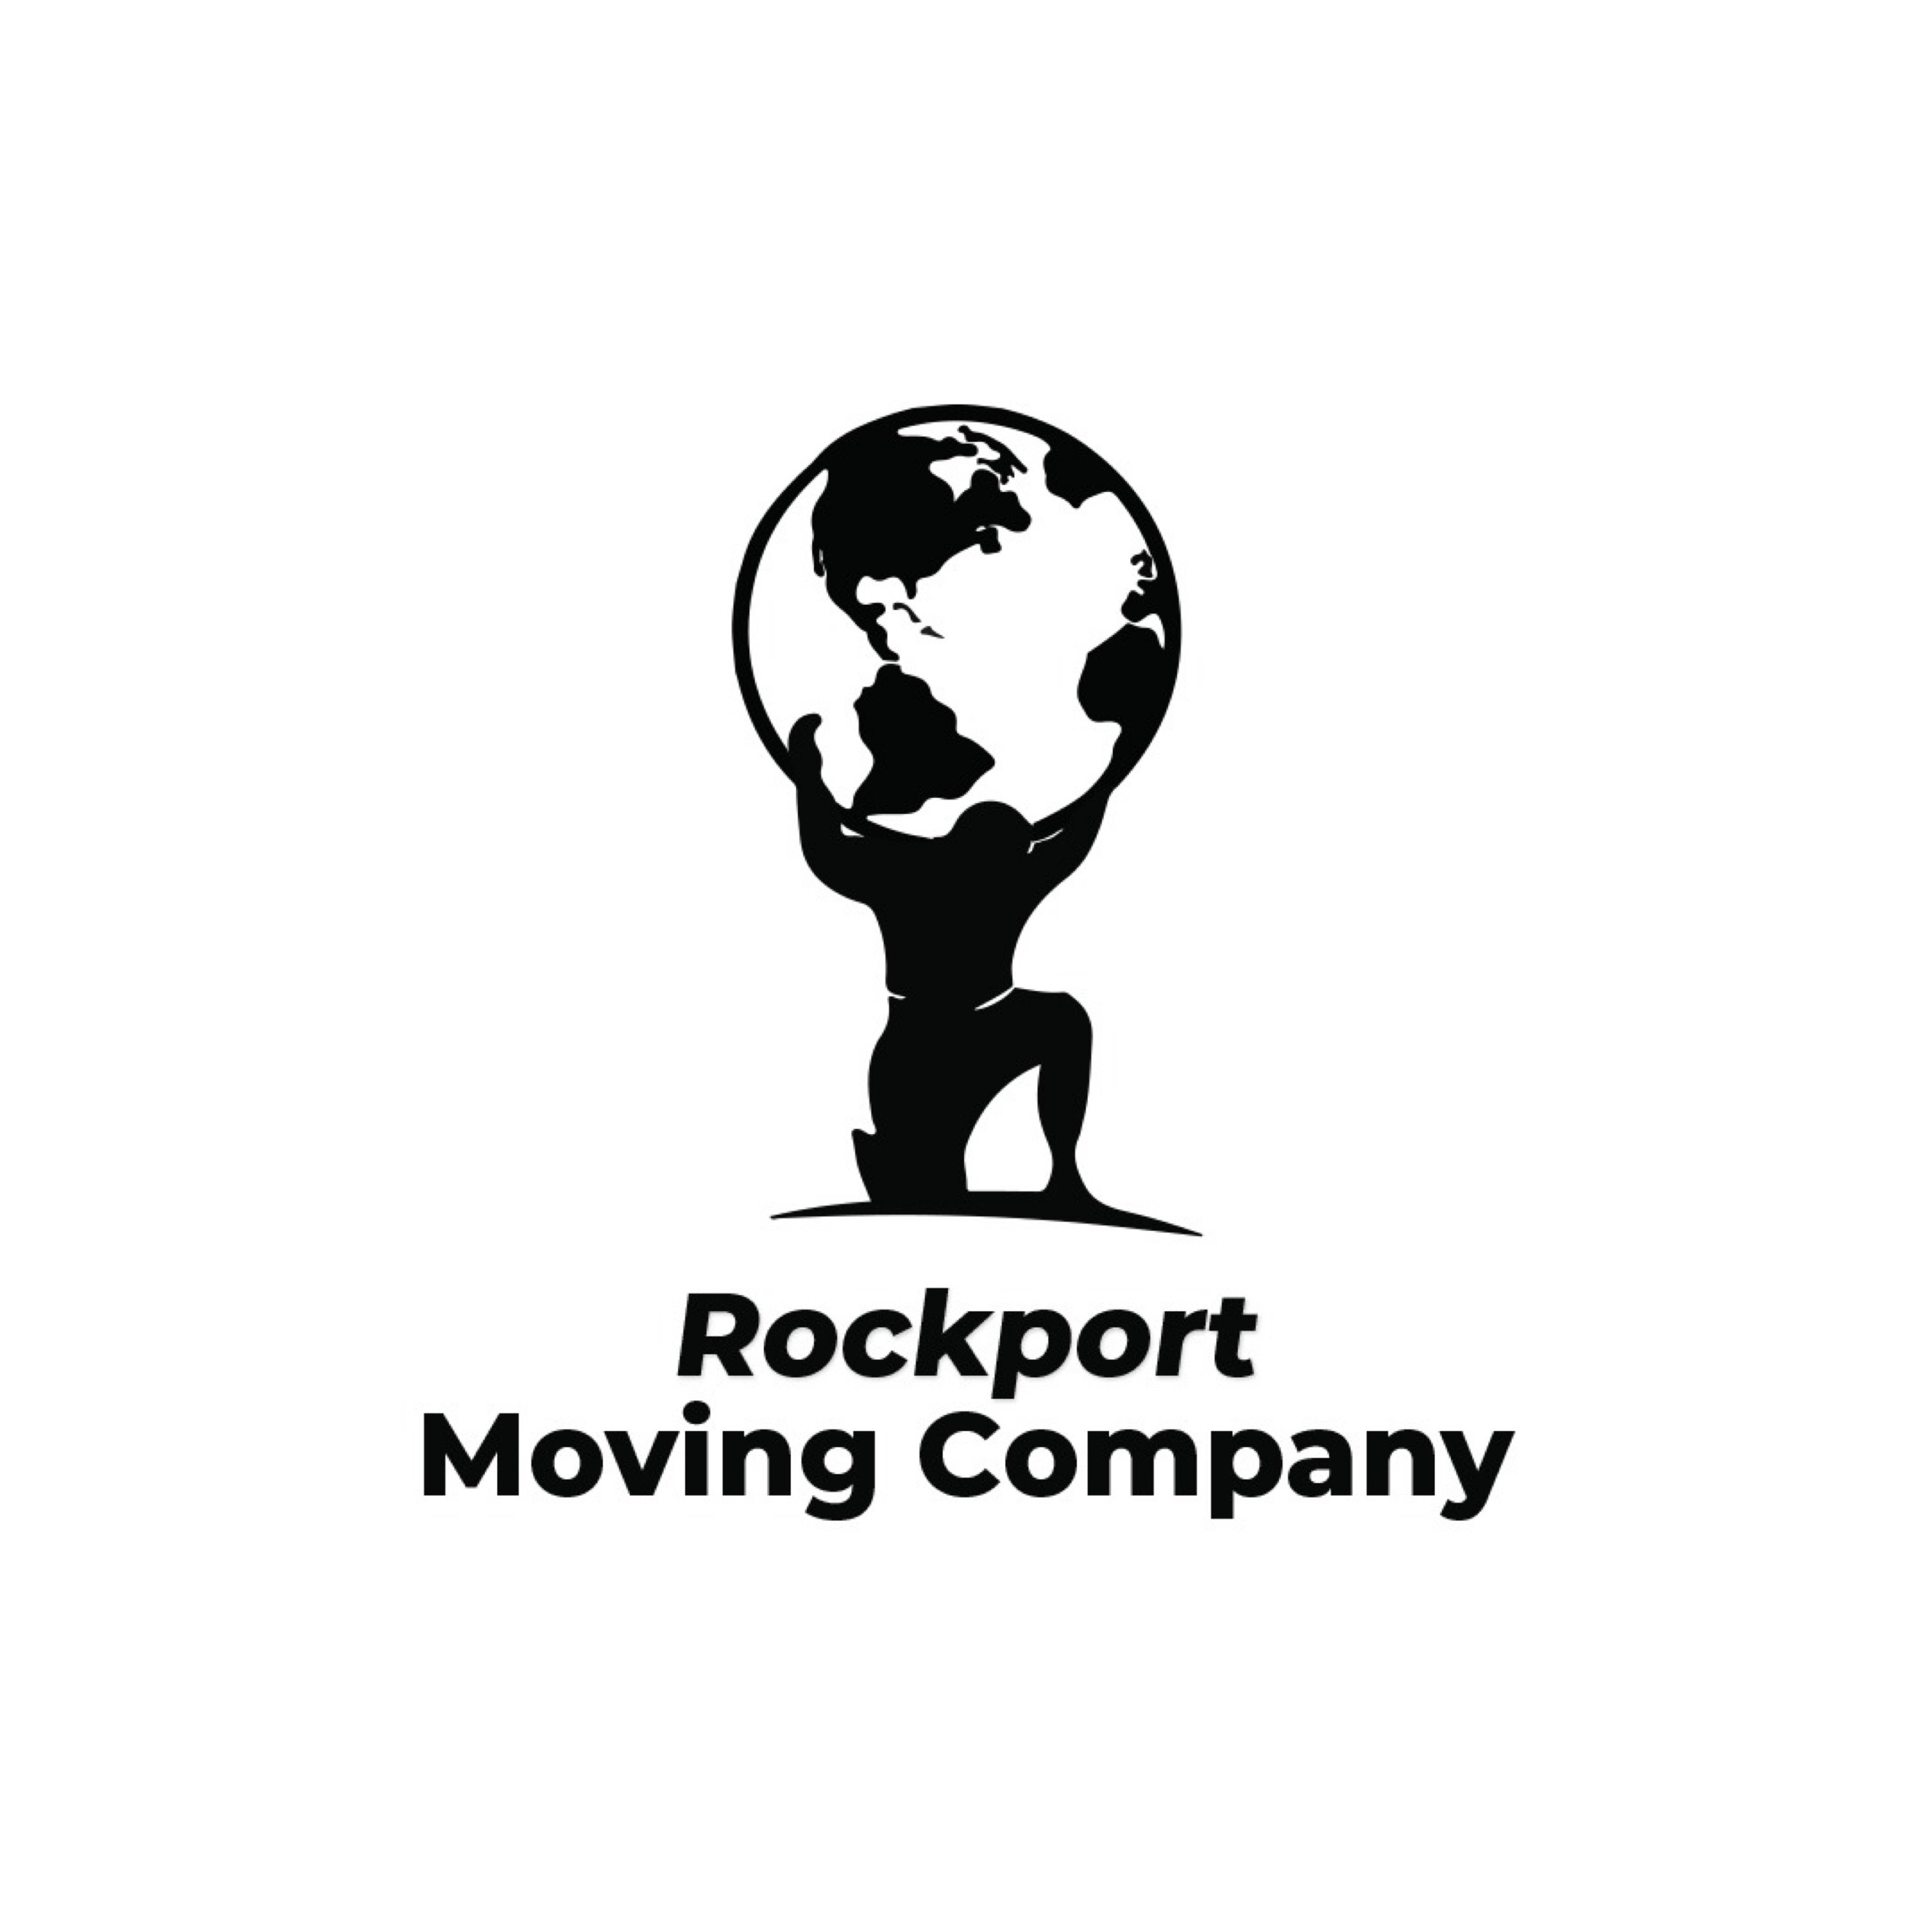 Rockport Moving Company Logo